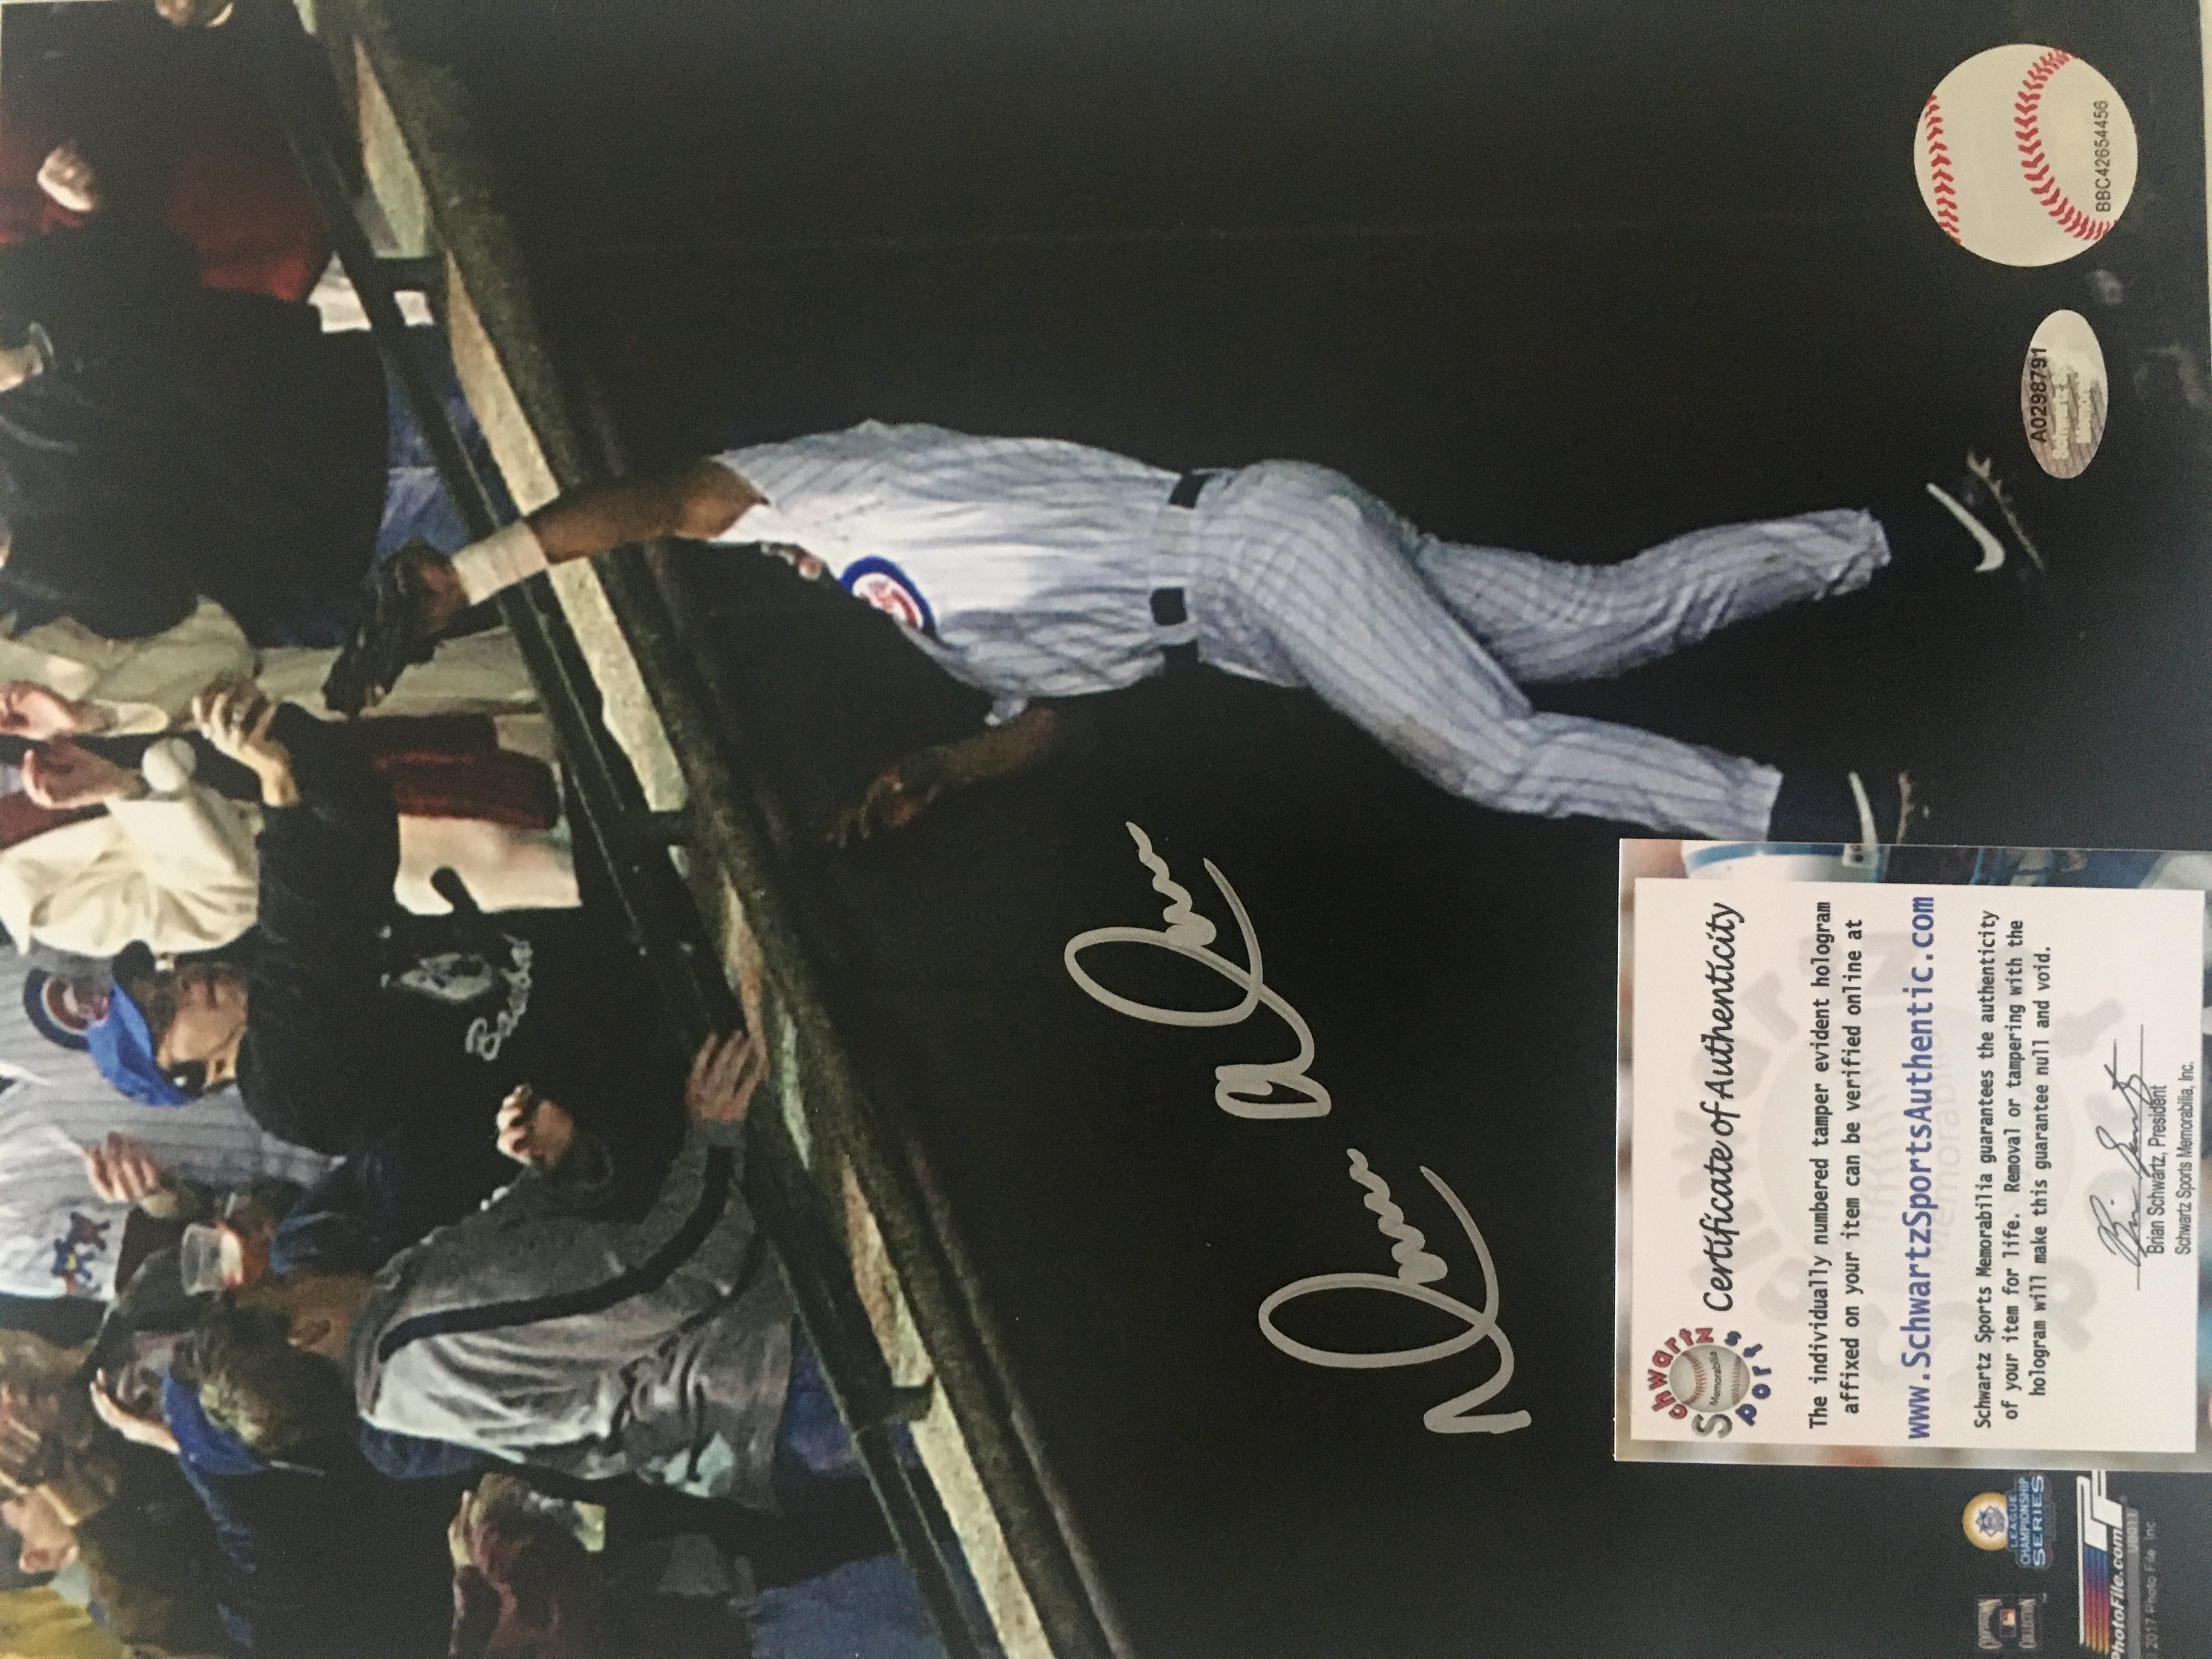 Chicago Cubs Autographed Baseball Memorabilia